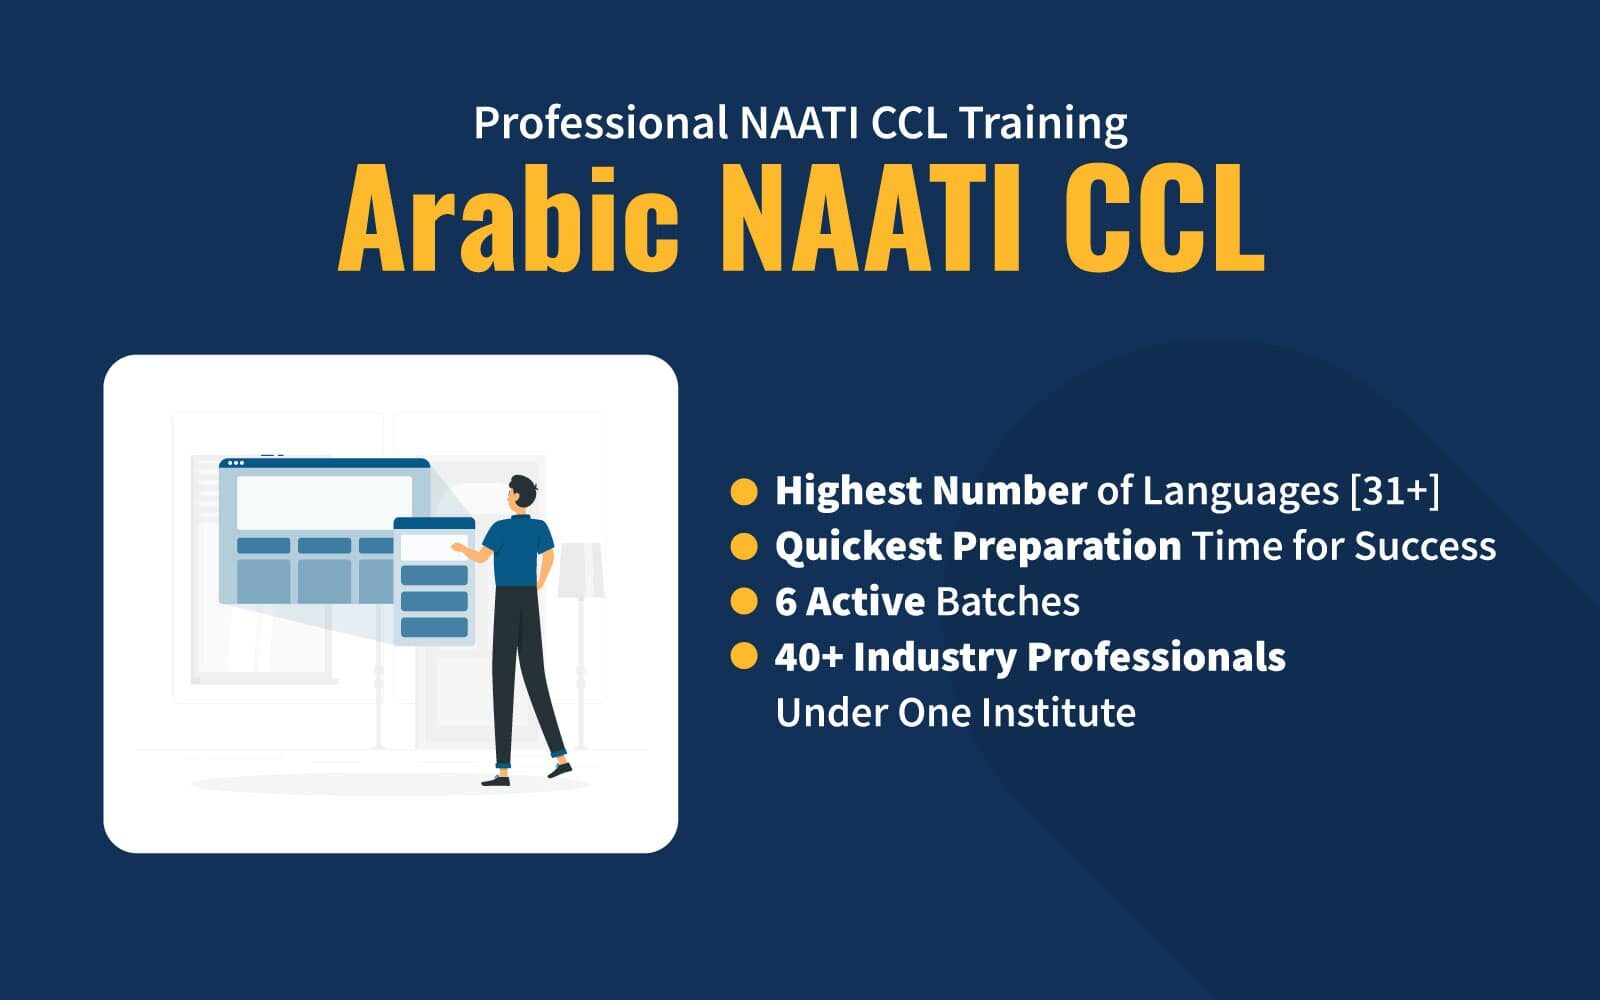 Arabic NAATI CCL | Professional Training image